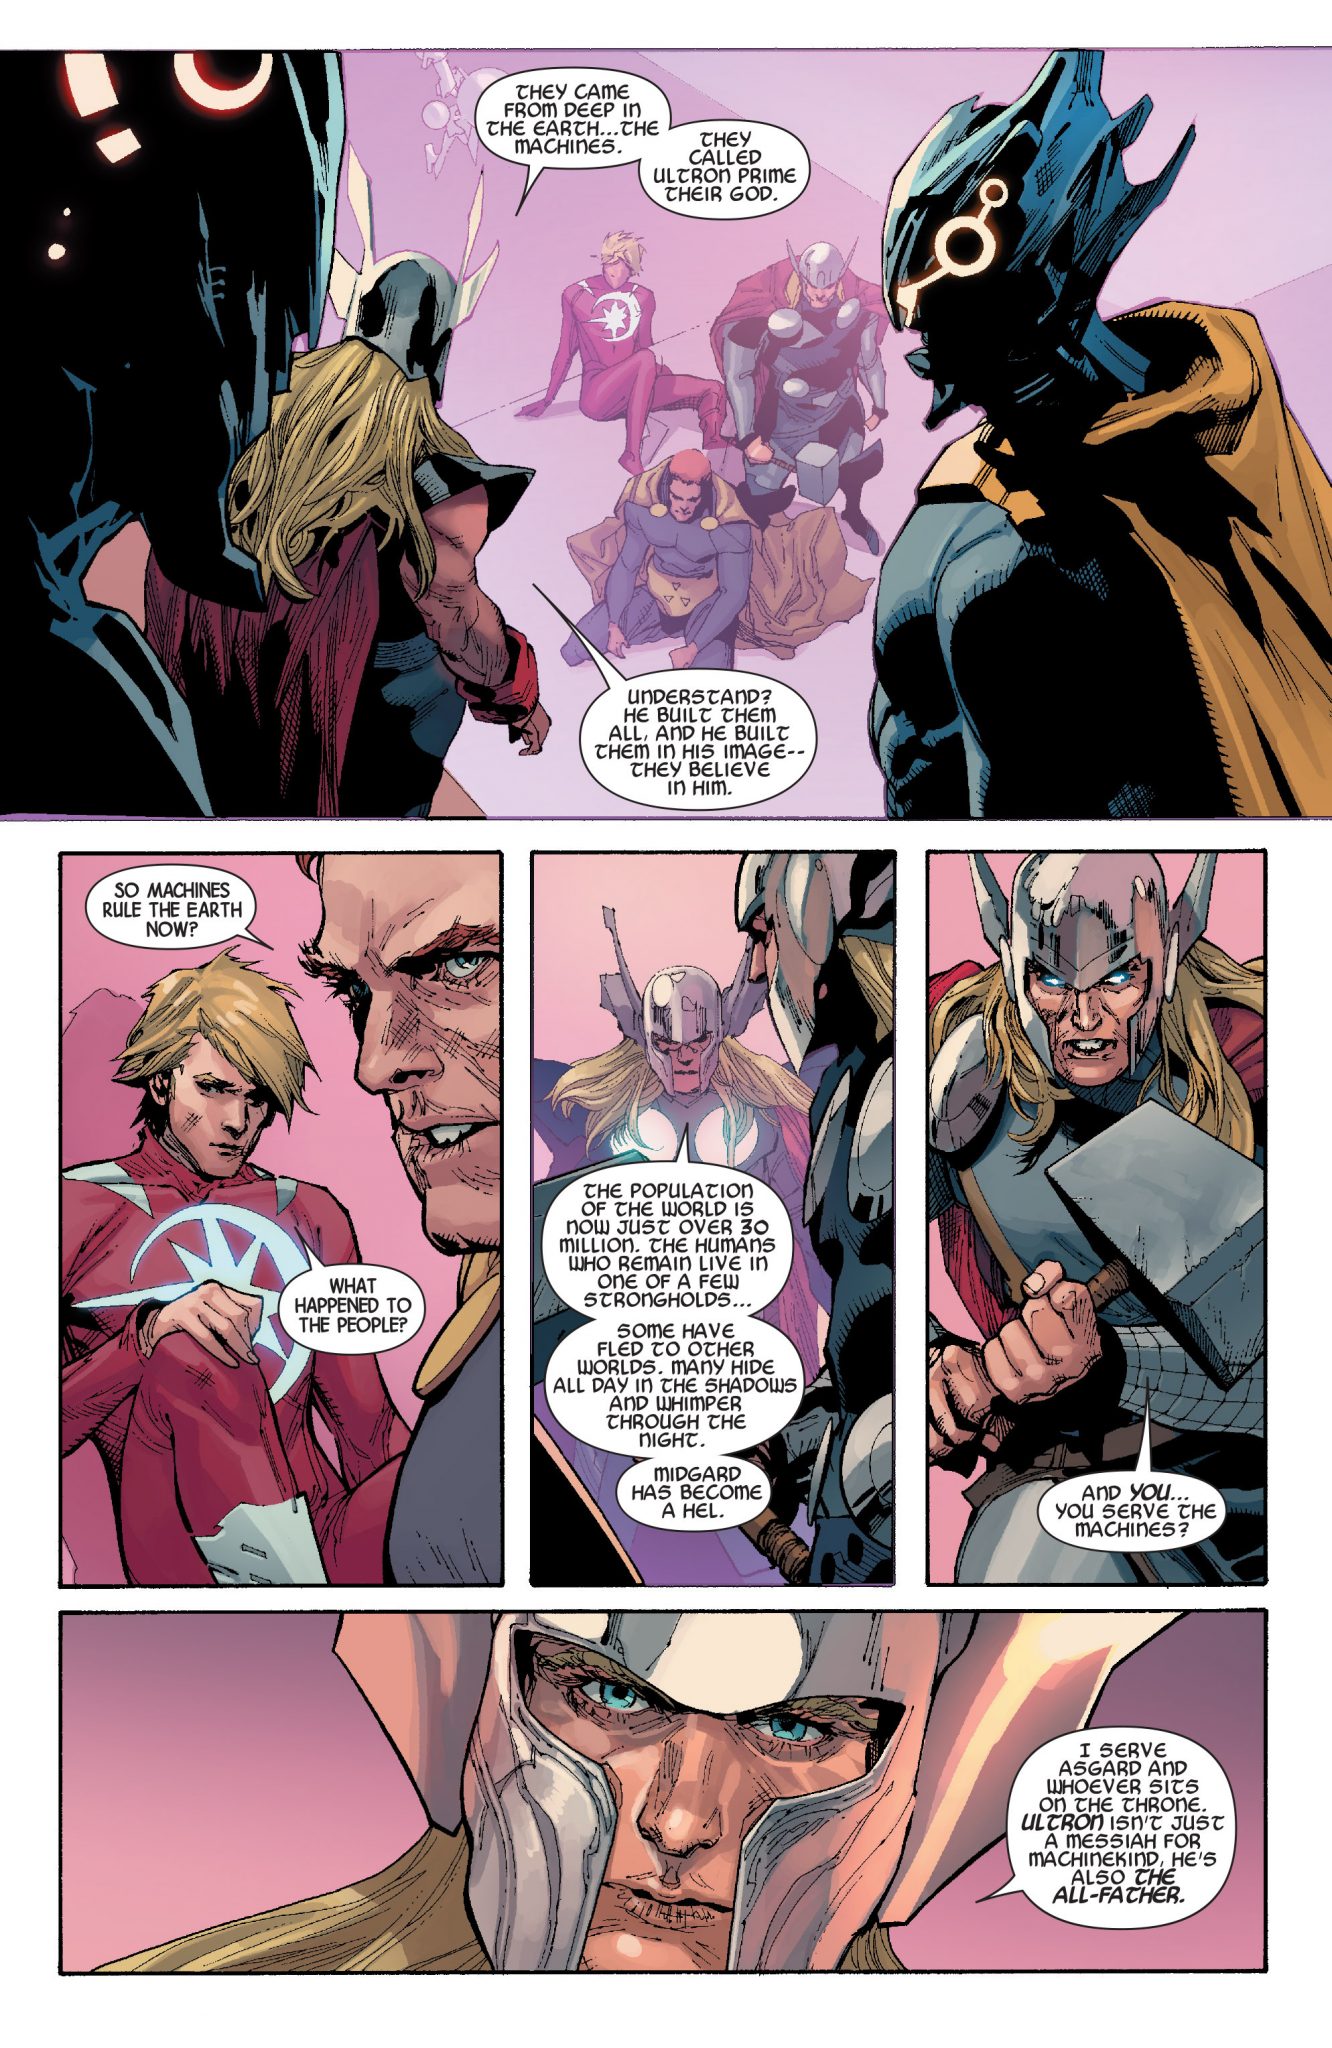 Detalhes de Powers of X - Poderes dos X - Avengers Vol 5 #31 - Thor do futuro fala sobre Ultron o Pai de Todos - Blog Farofeiros